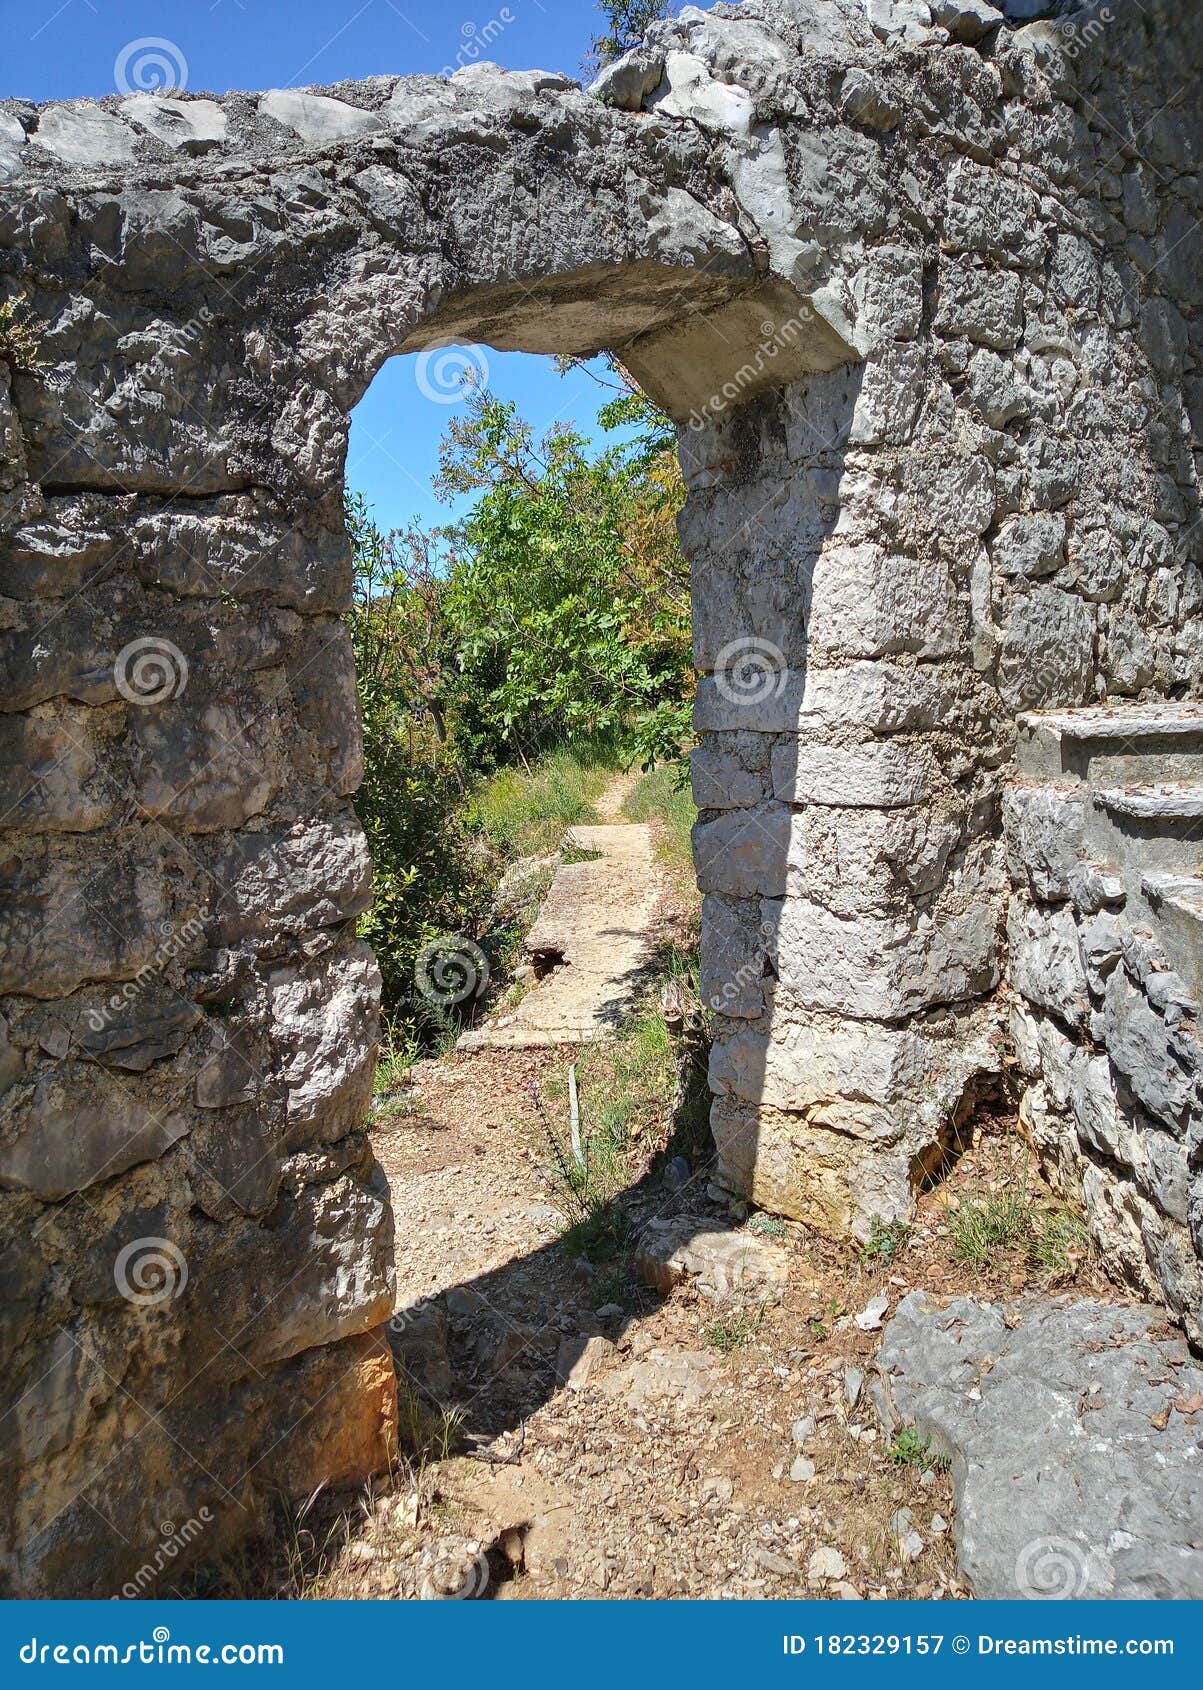 stone door in uvala scott